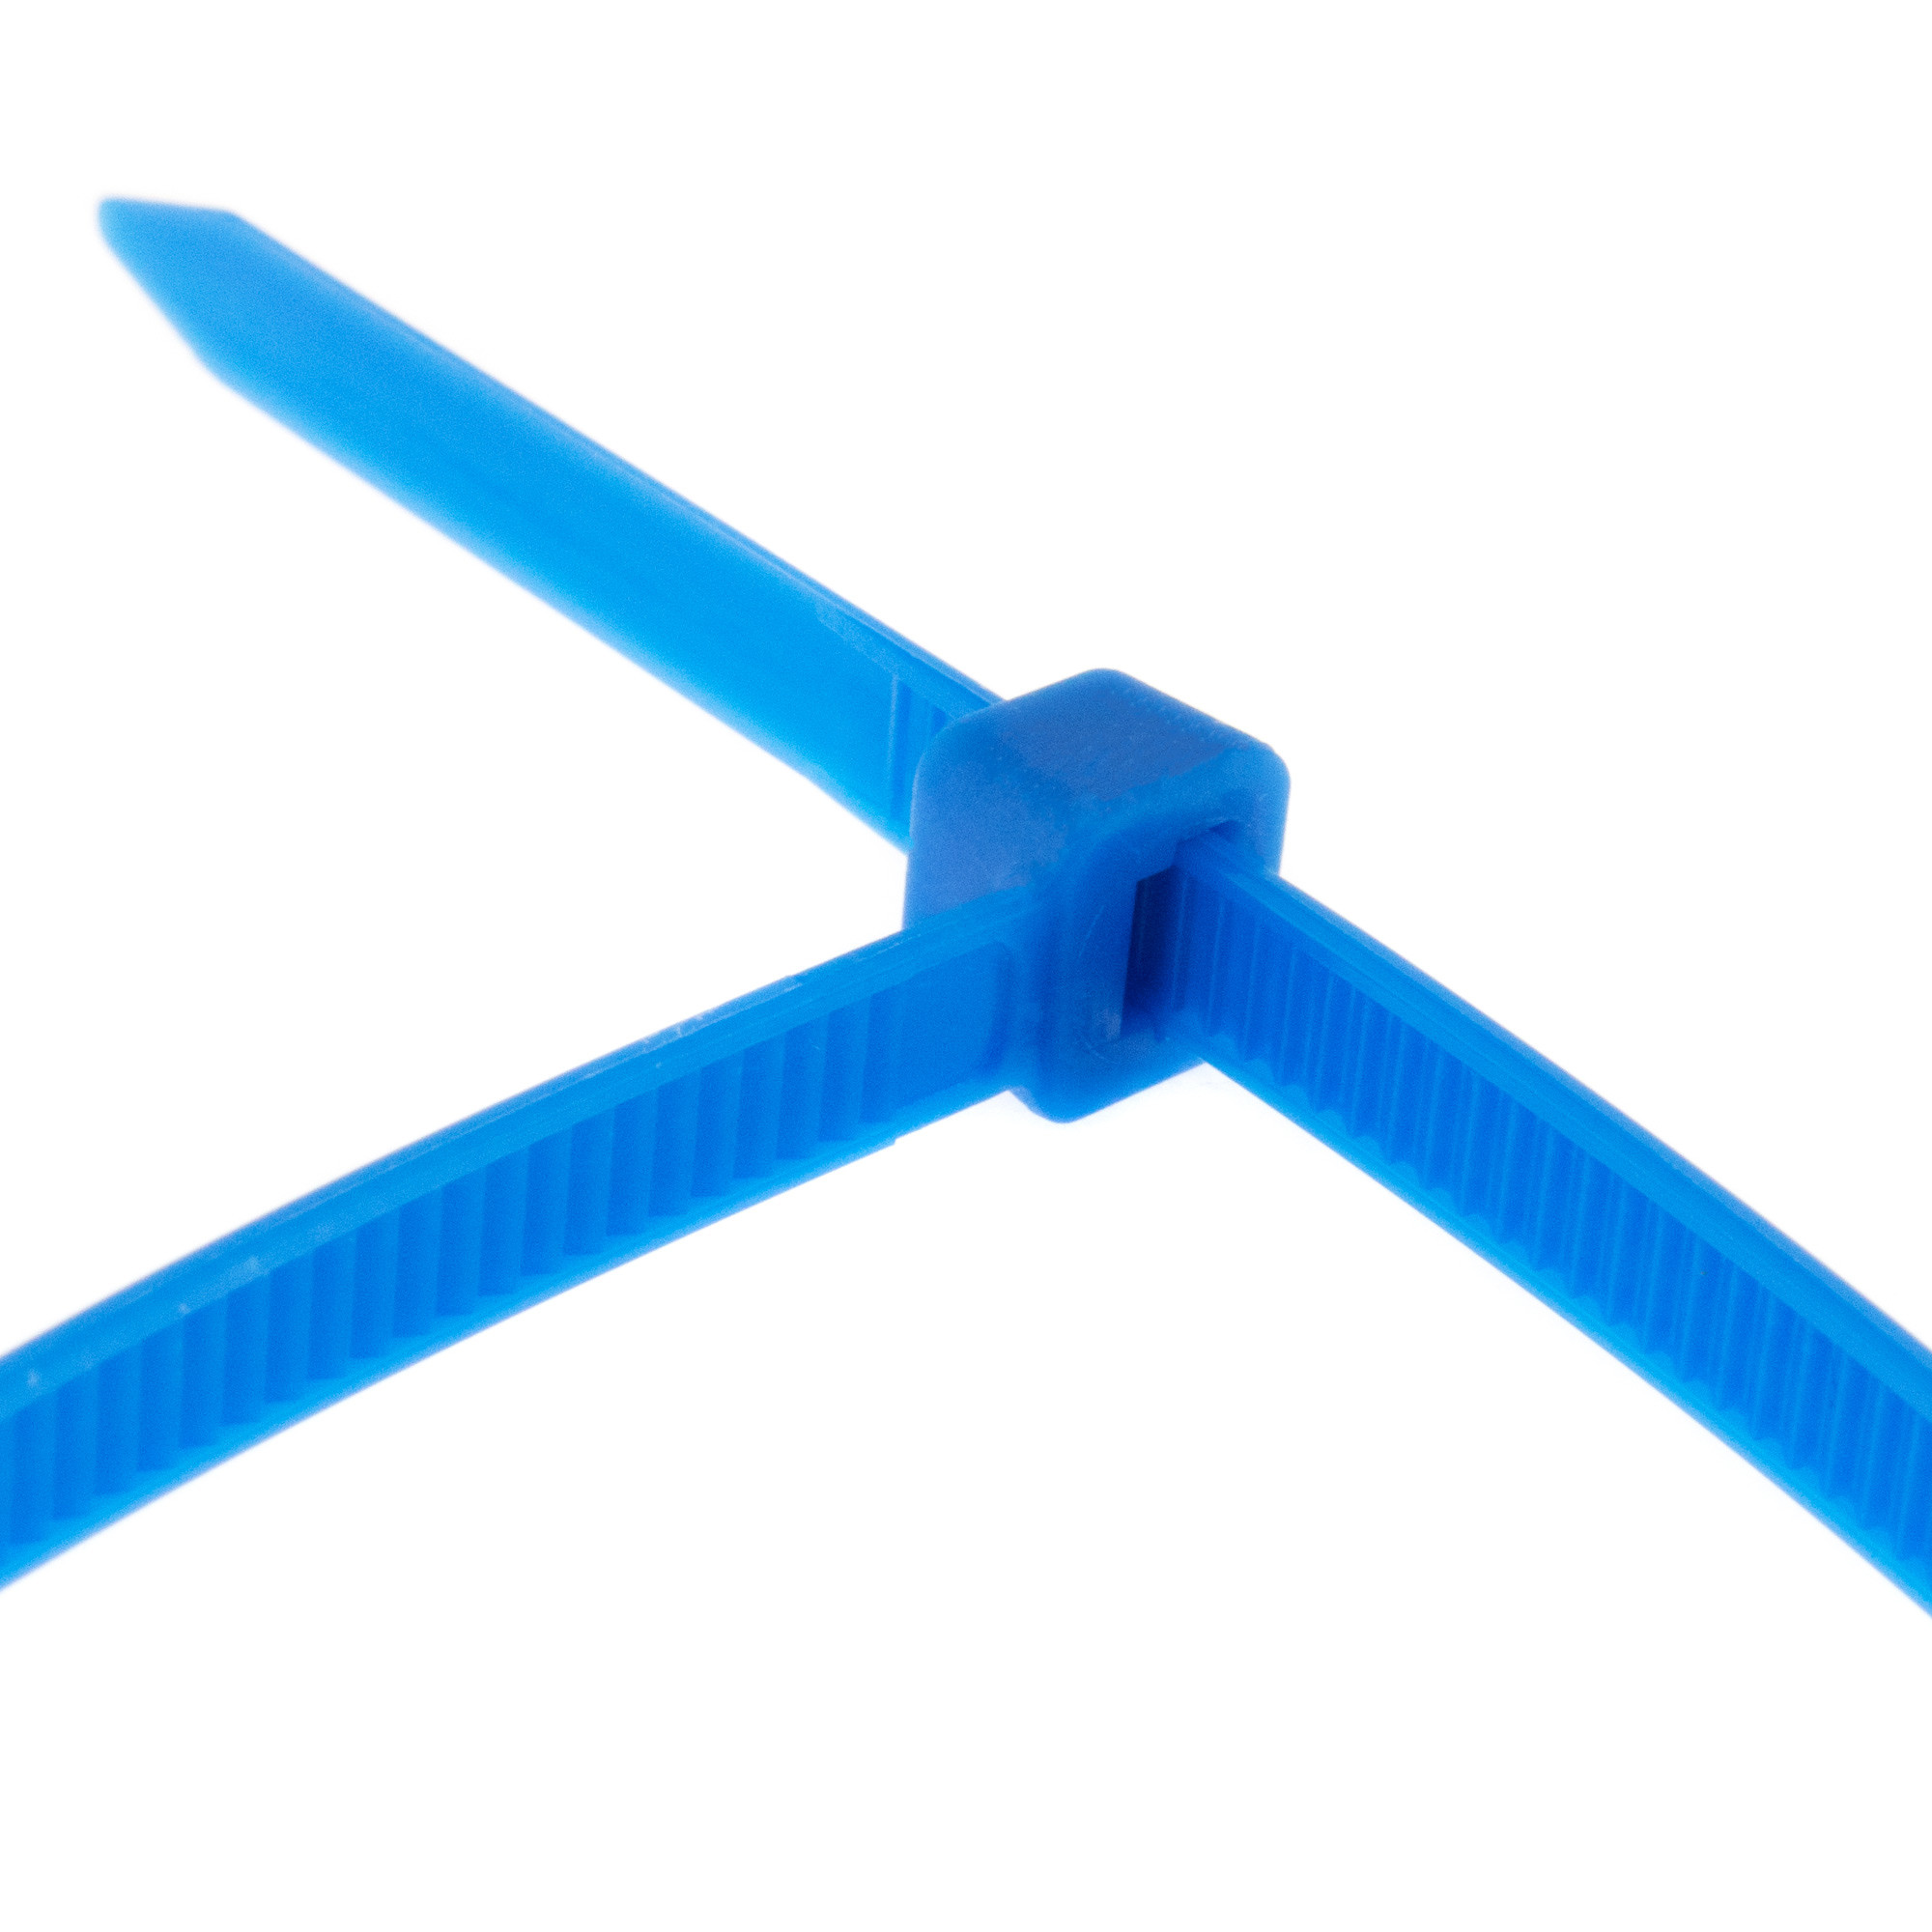 Cable tie self-locking 200 x 2,5mm, blue, 100PCS